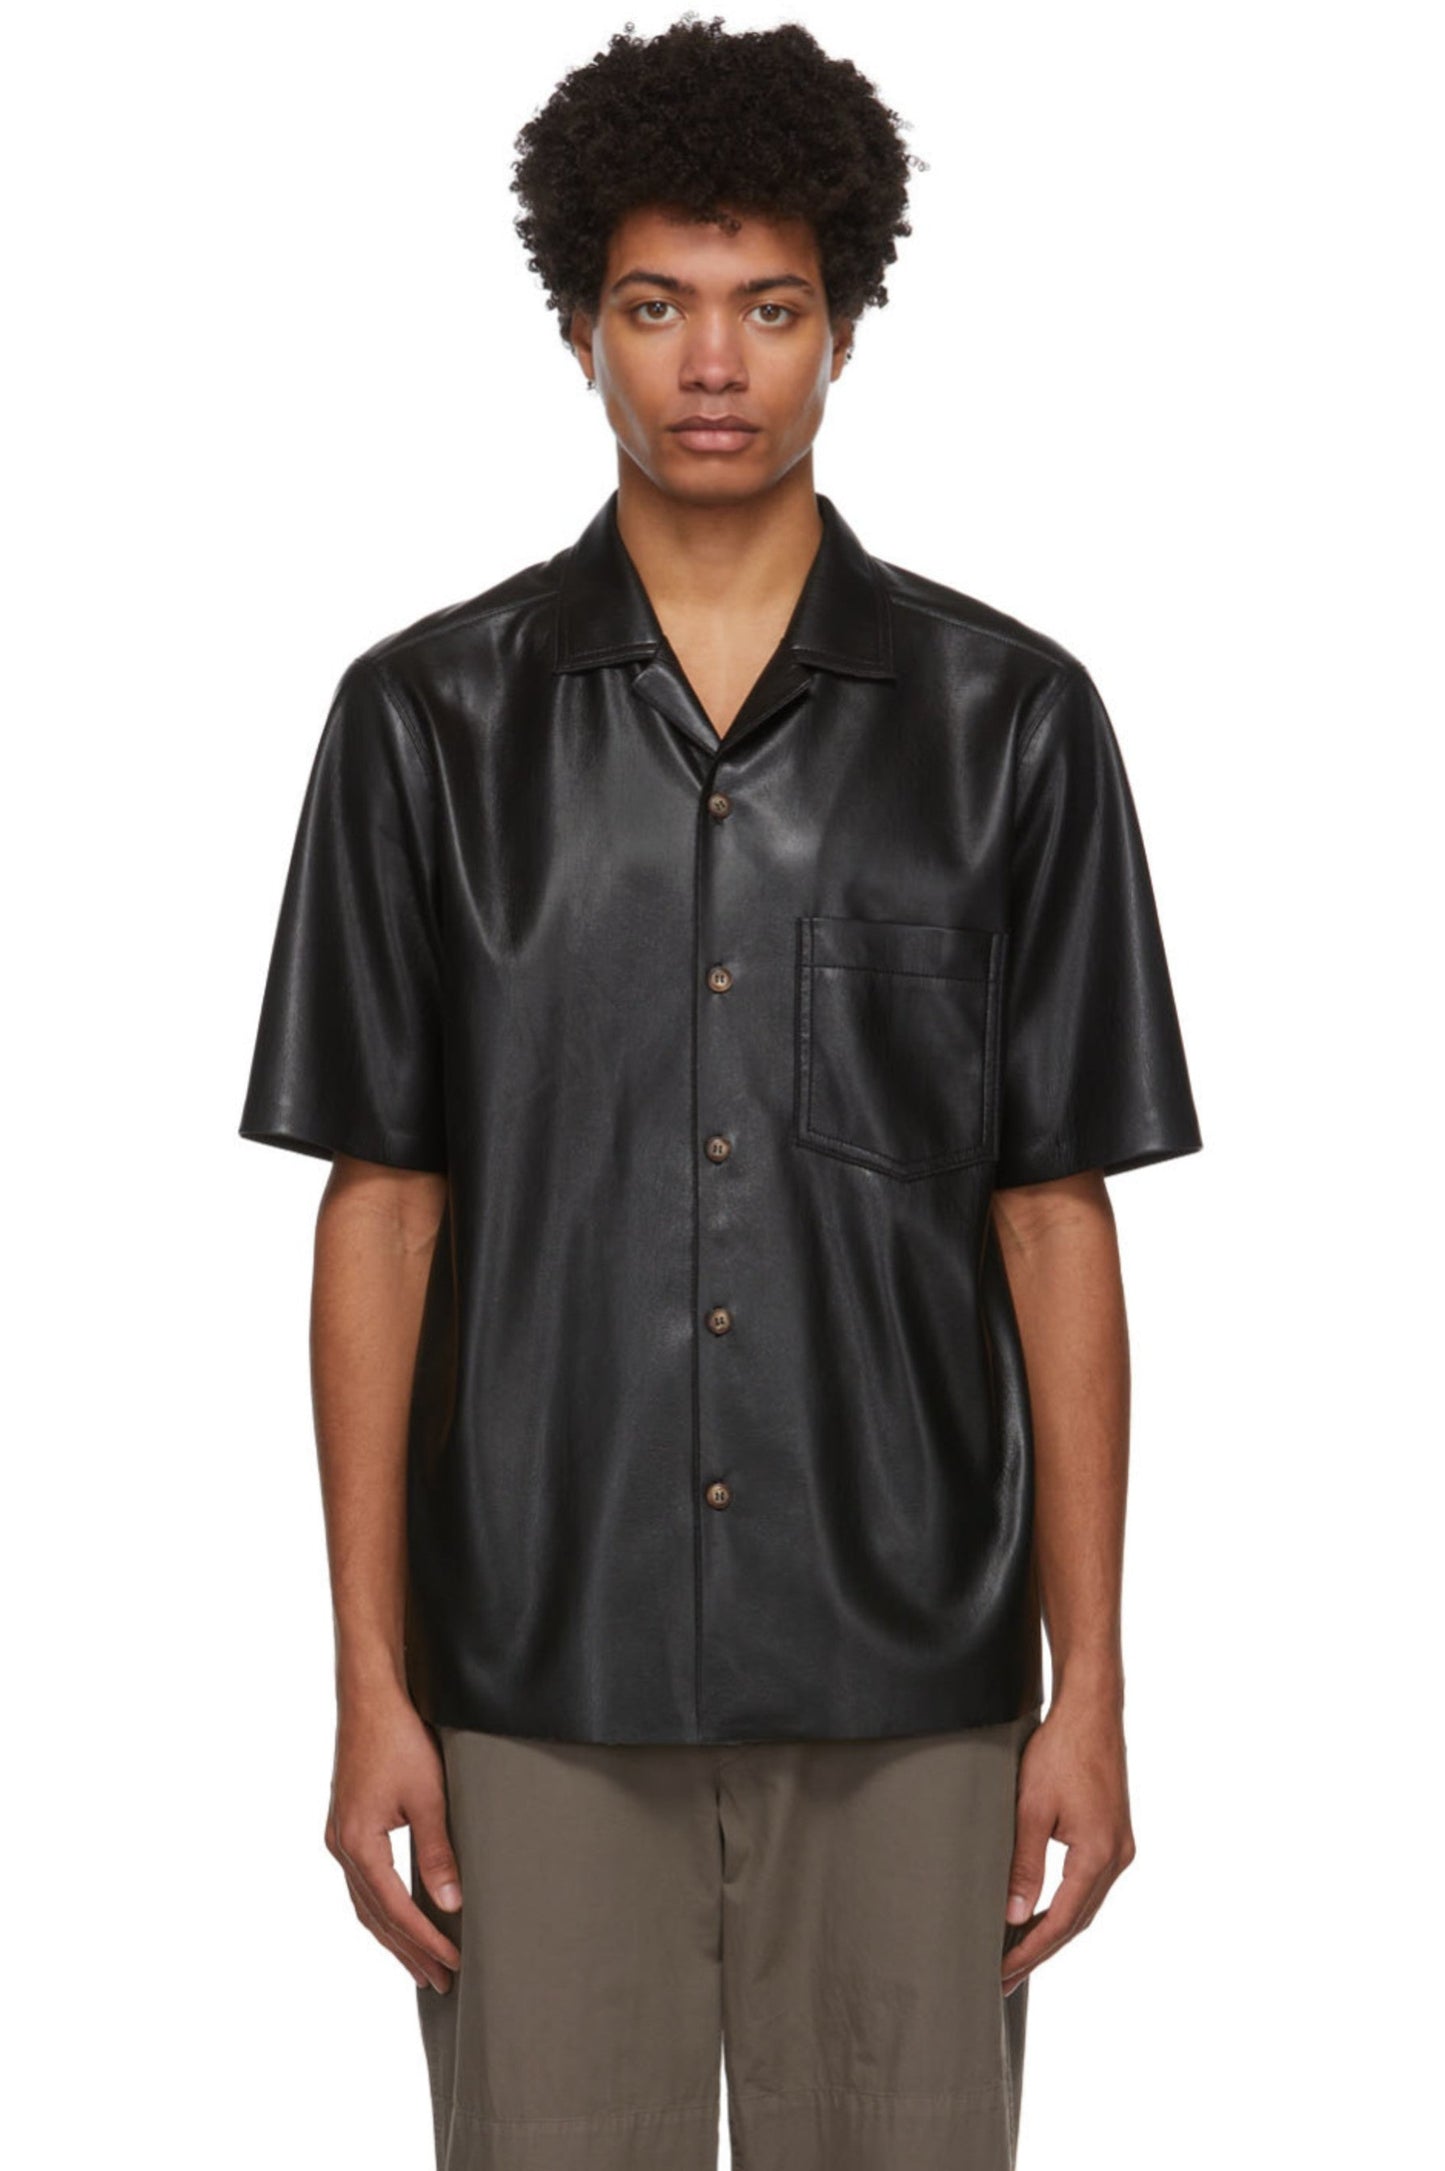 Men’s Trendy Black Leather Shirt